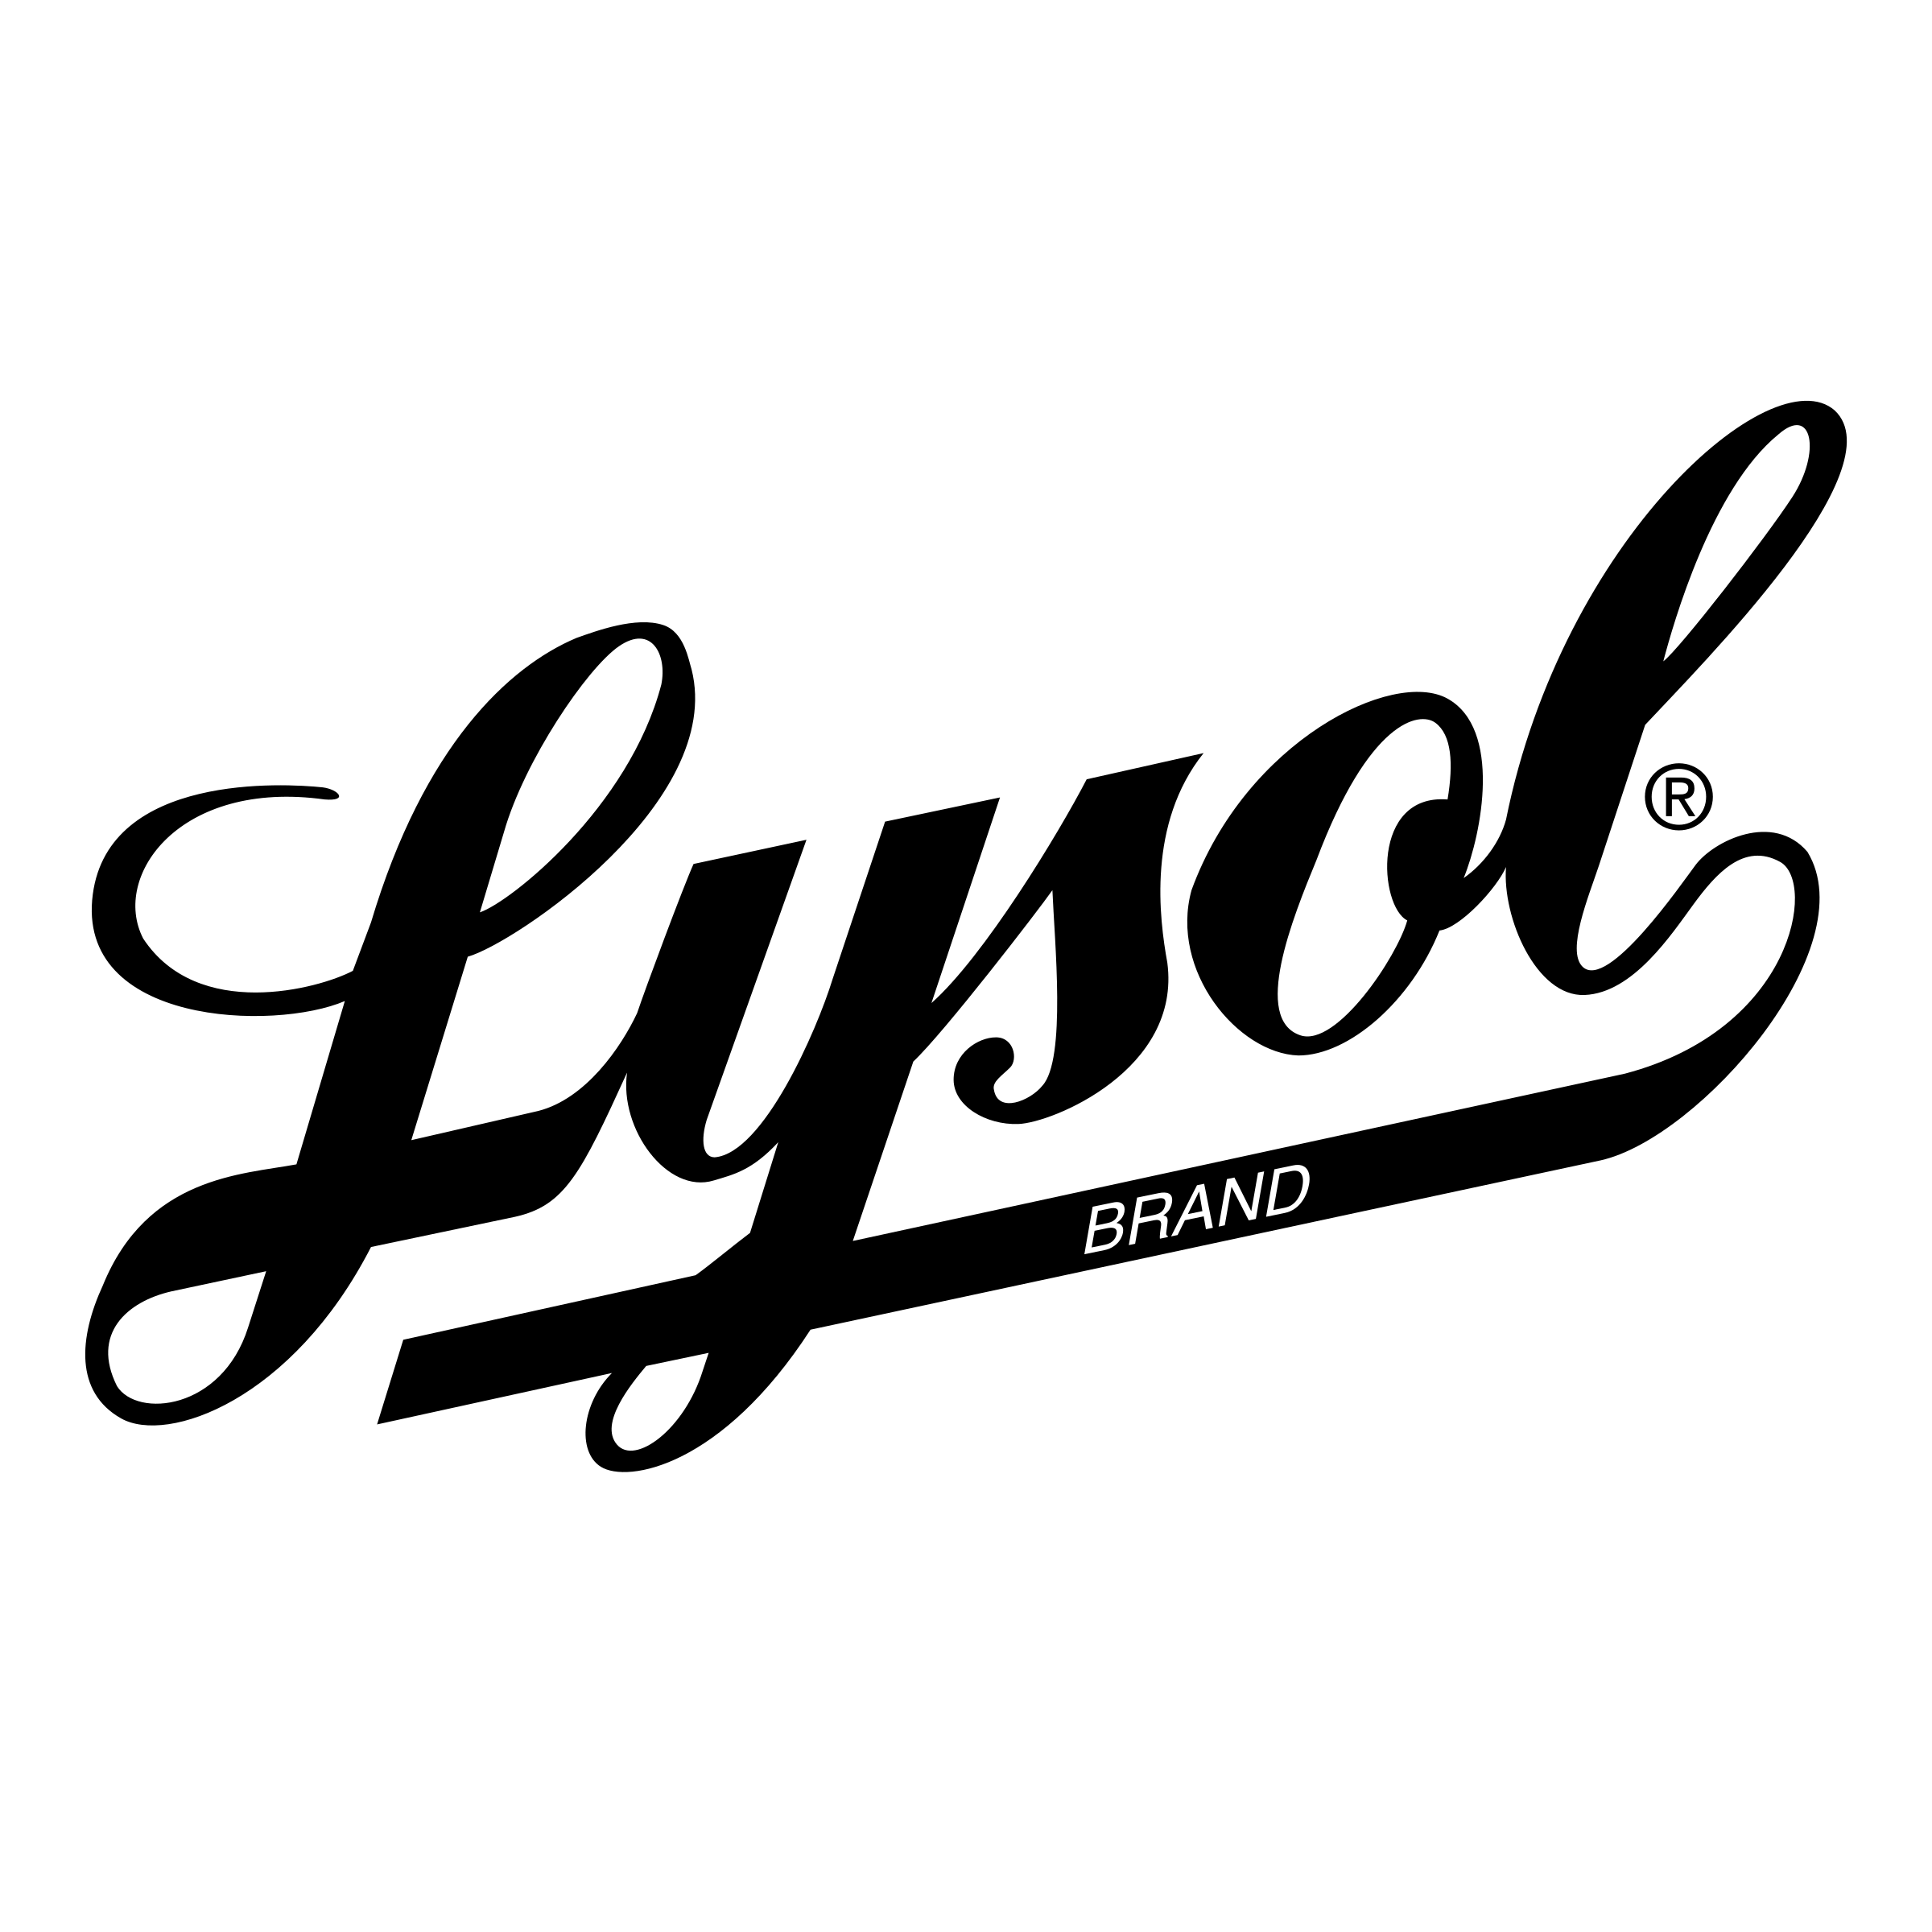 Lysol Logo - Lysol Logo PNG Transparent & SVG Vector - Freebie Supply